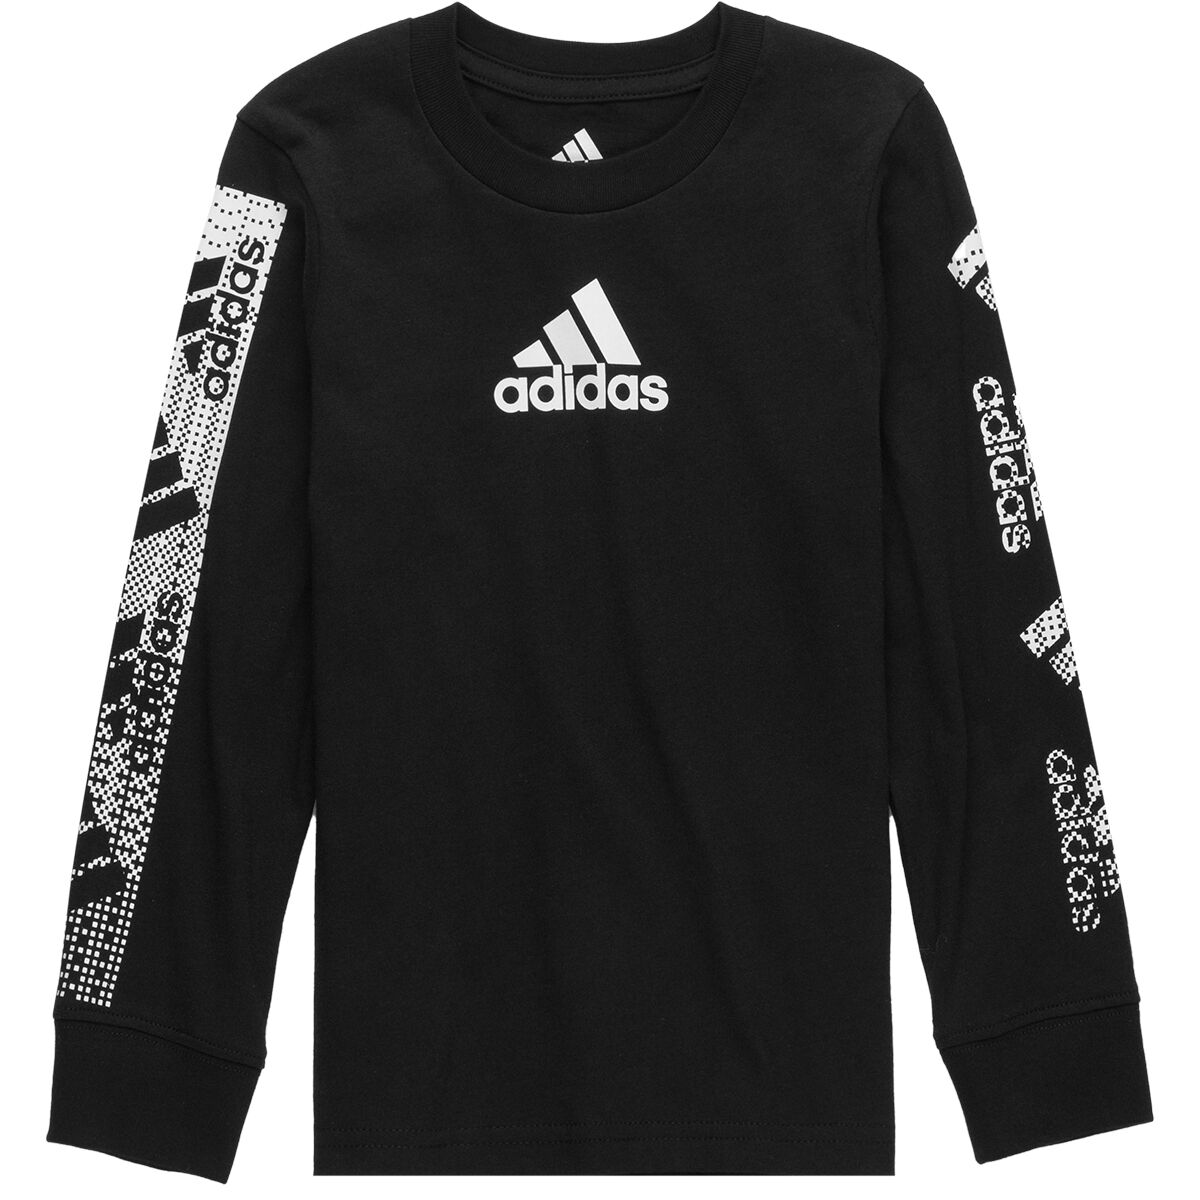 Adidas Pixel Brand Long-Sleeve T-Shirt - Boys'